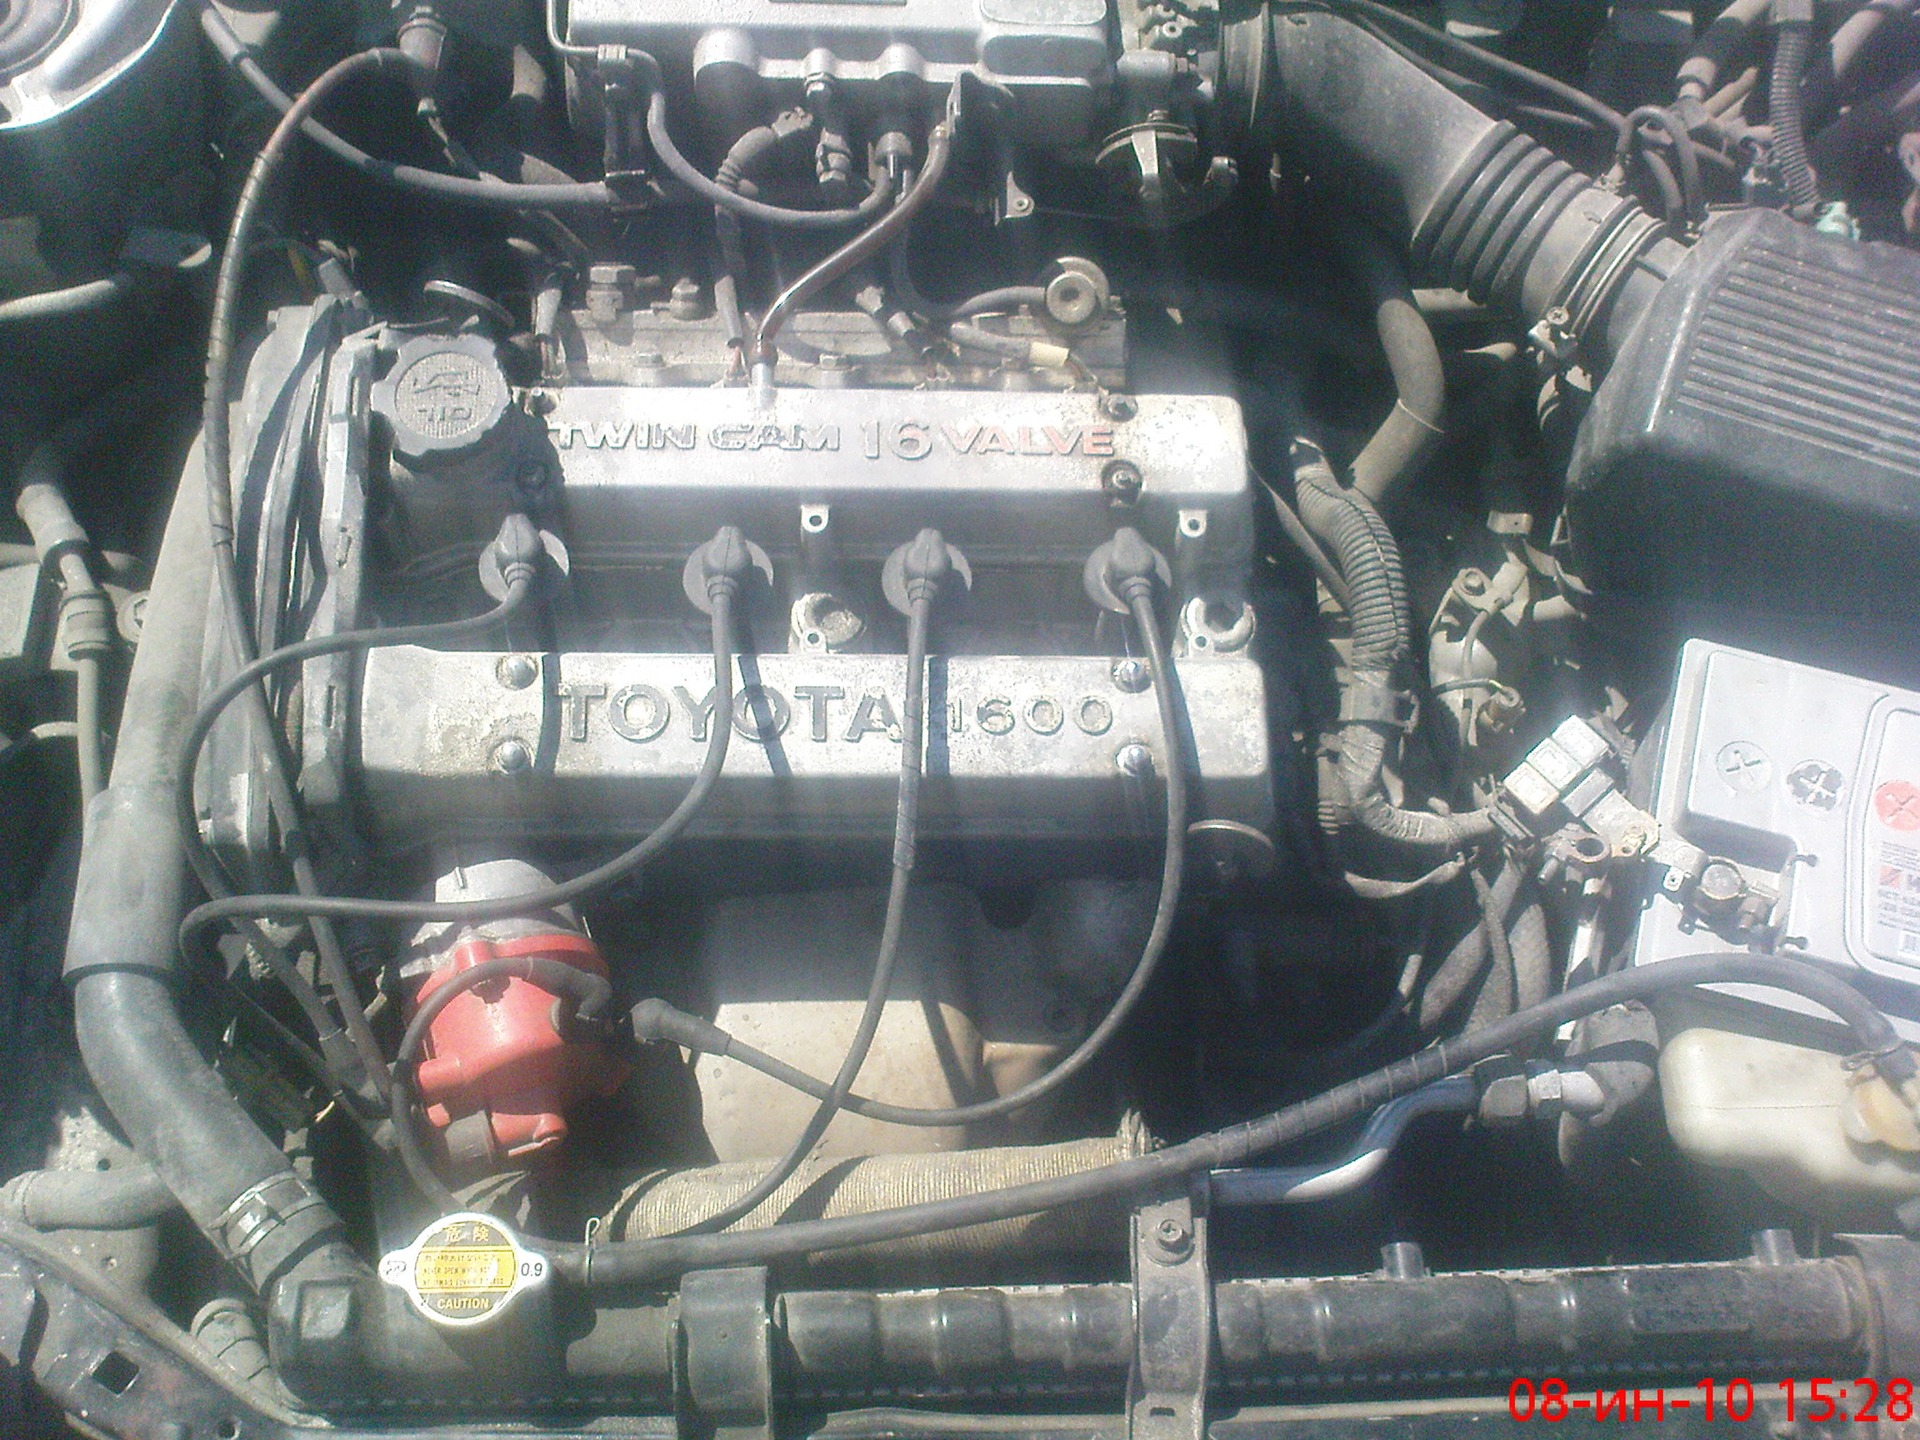 30 2010 Toyota Sprinter Trueno 16 1988